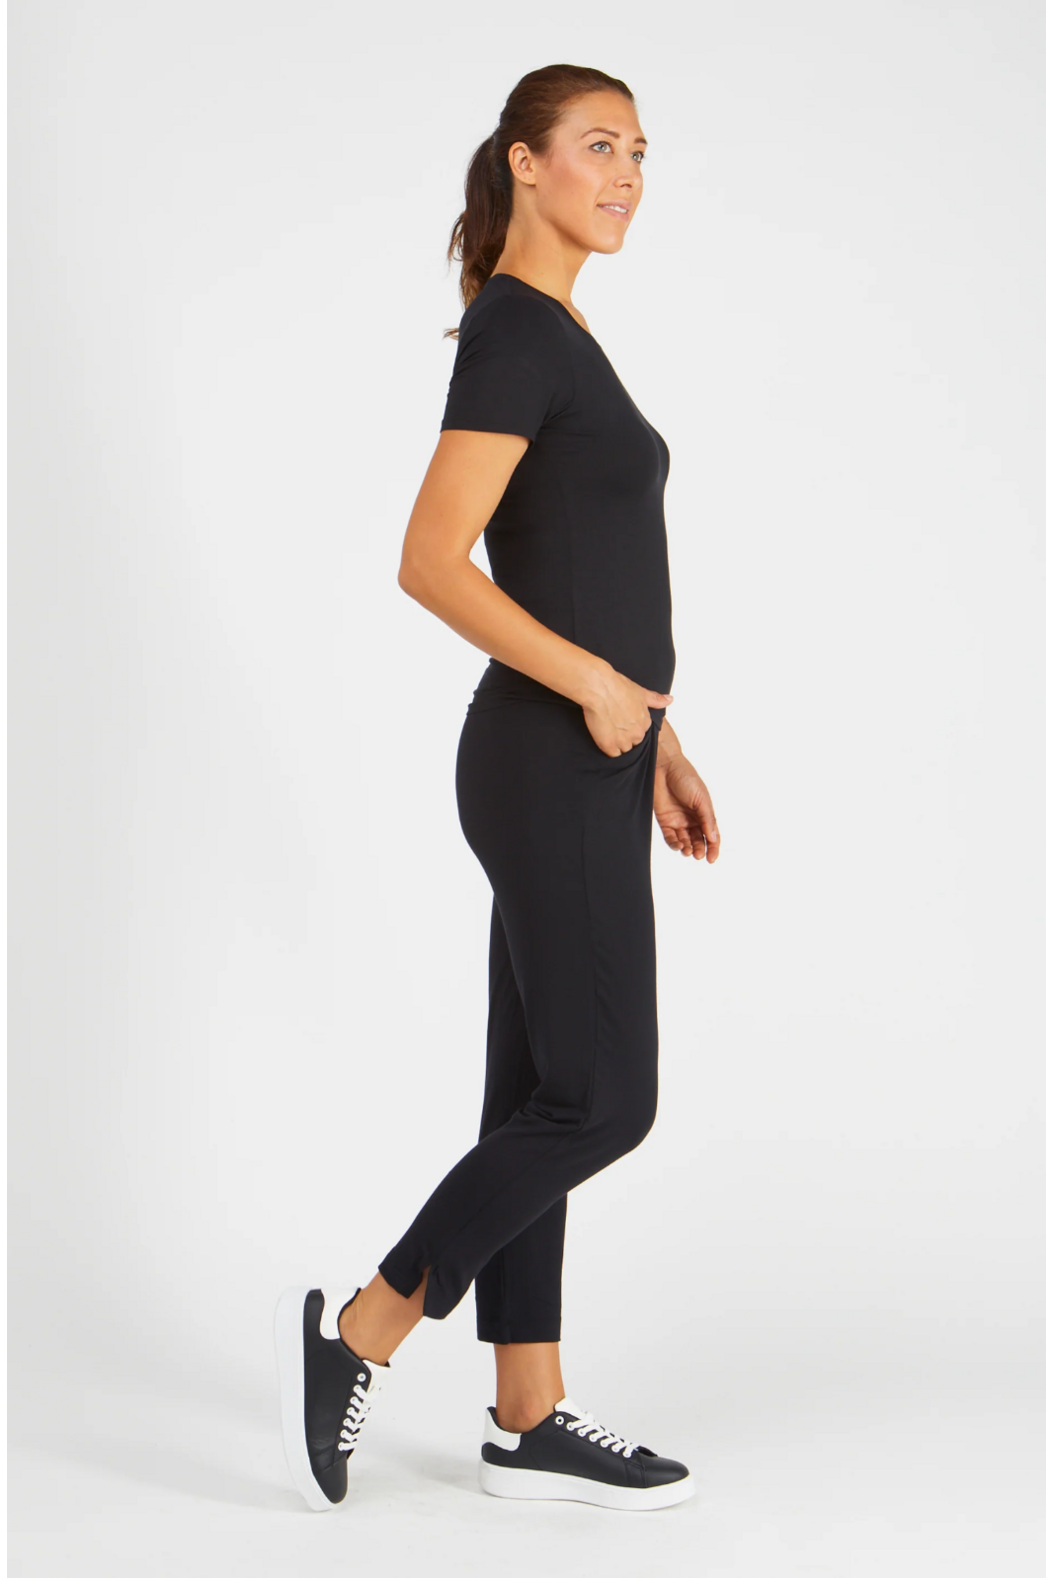 Tani Calf Length Leggings, Tani Clothing Australia